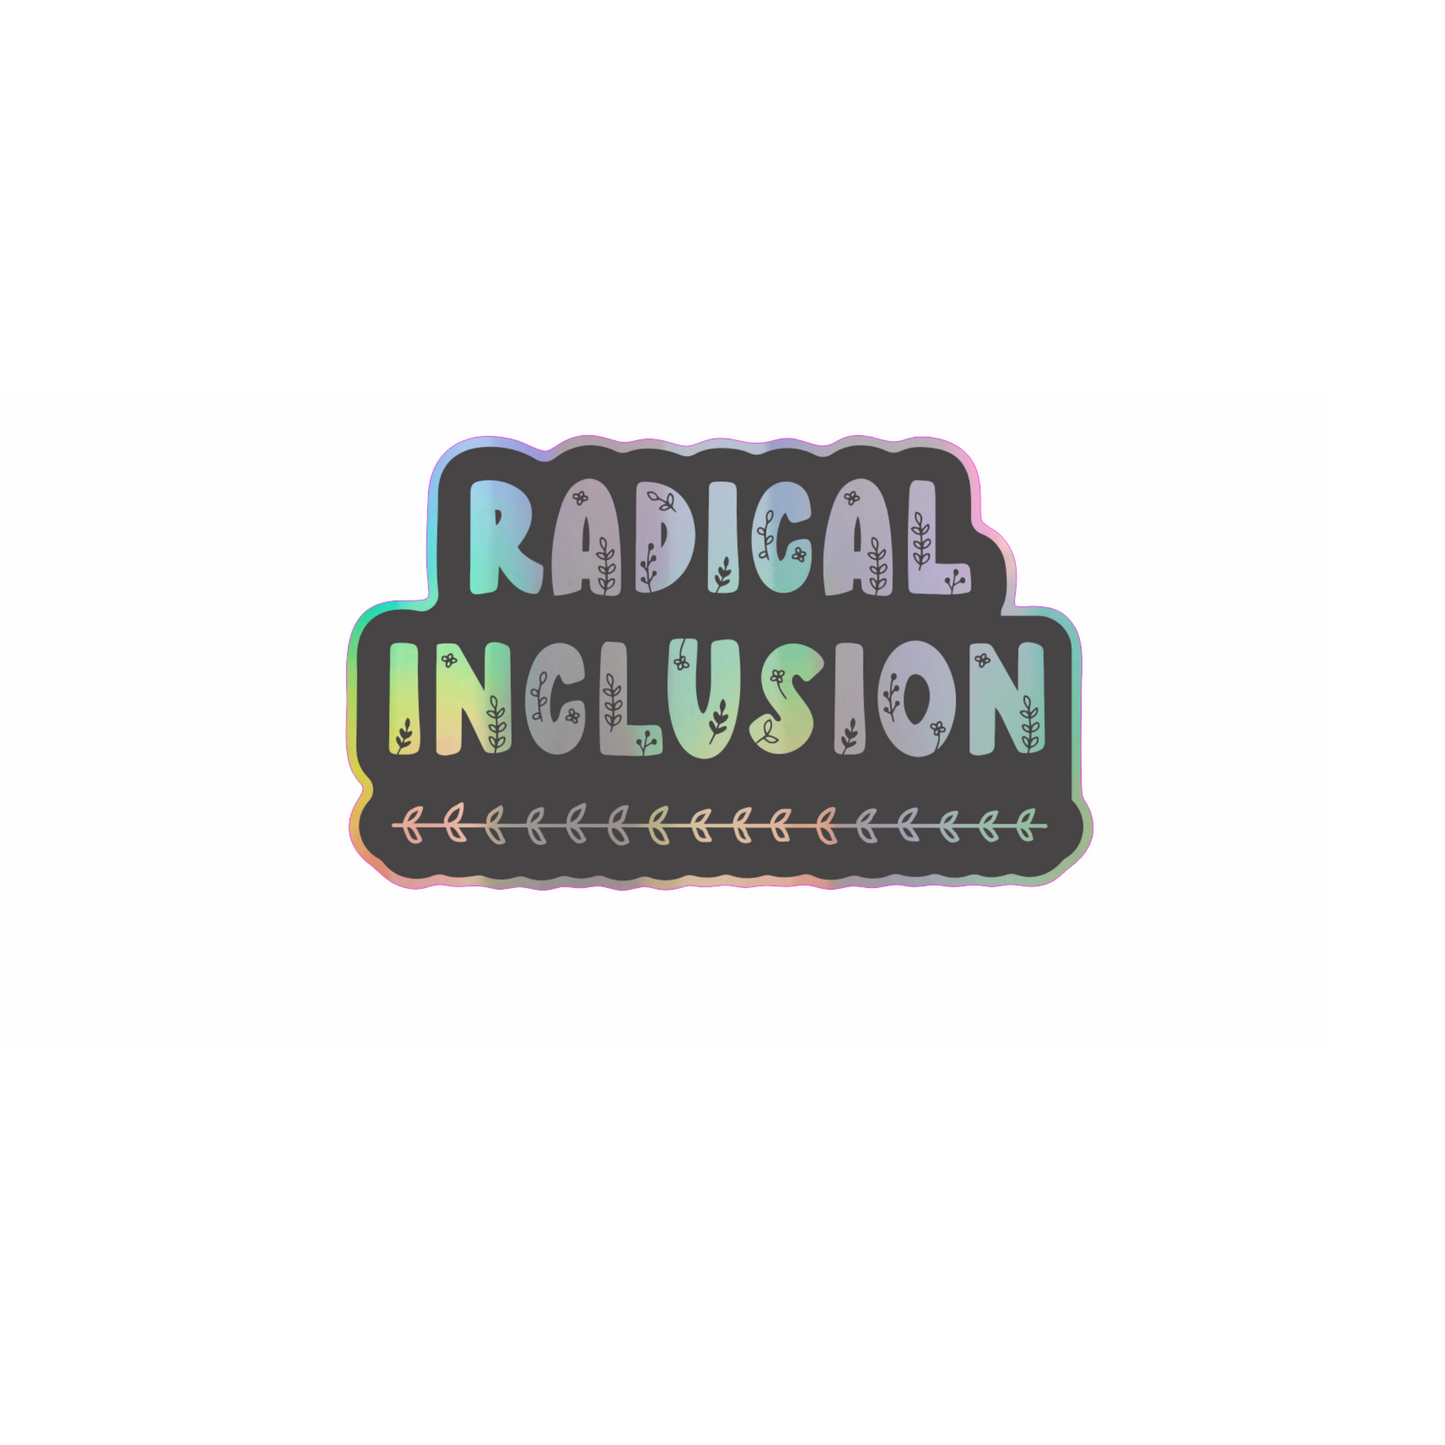 Radical inclusion holographic vinyl sticker